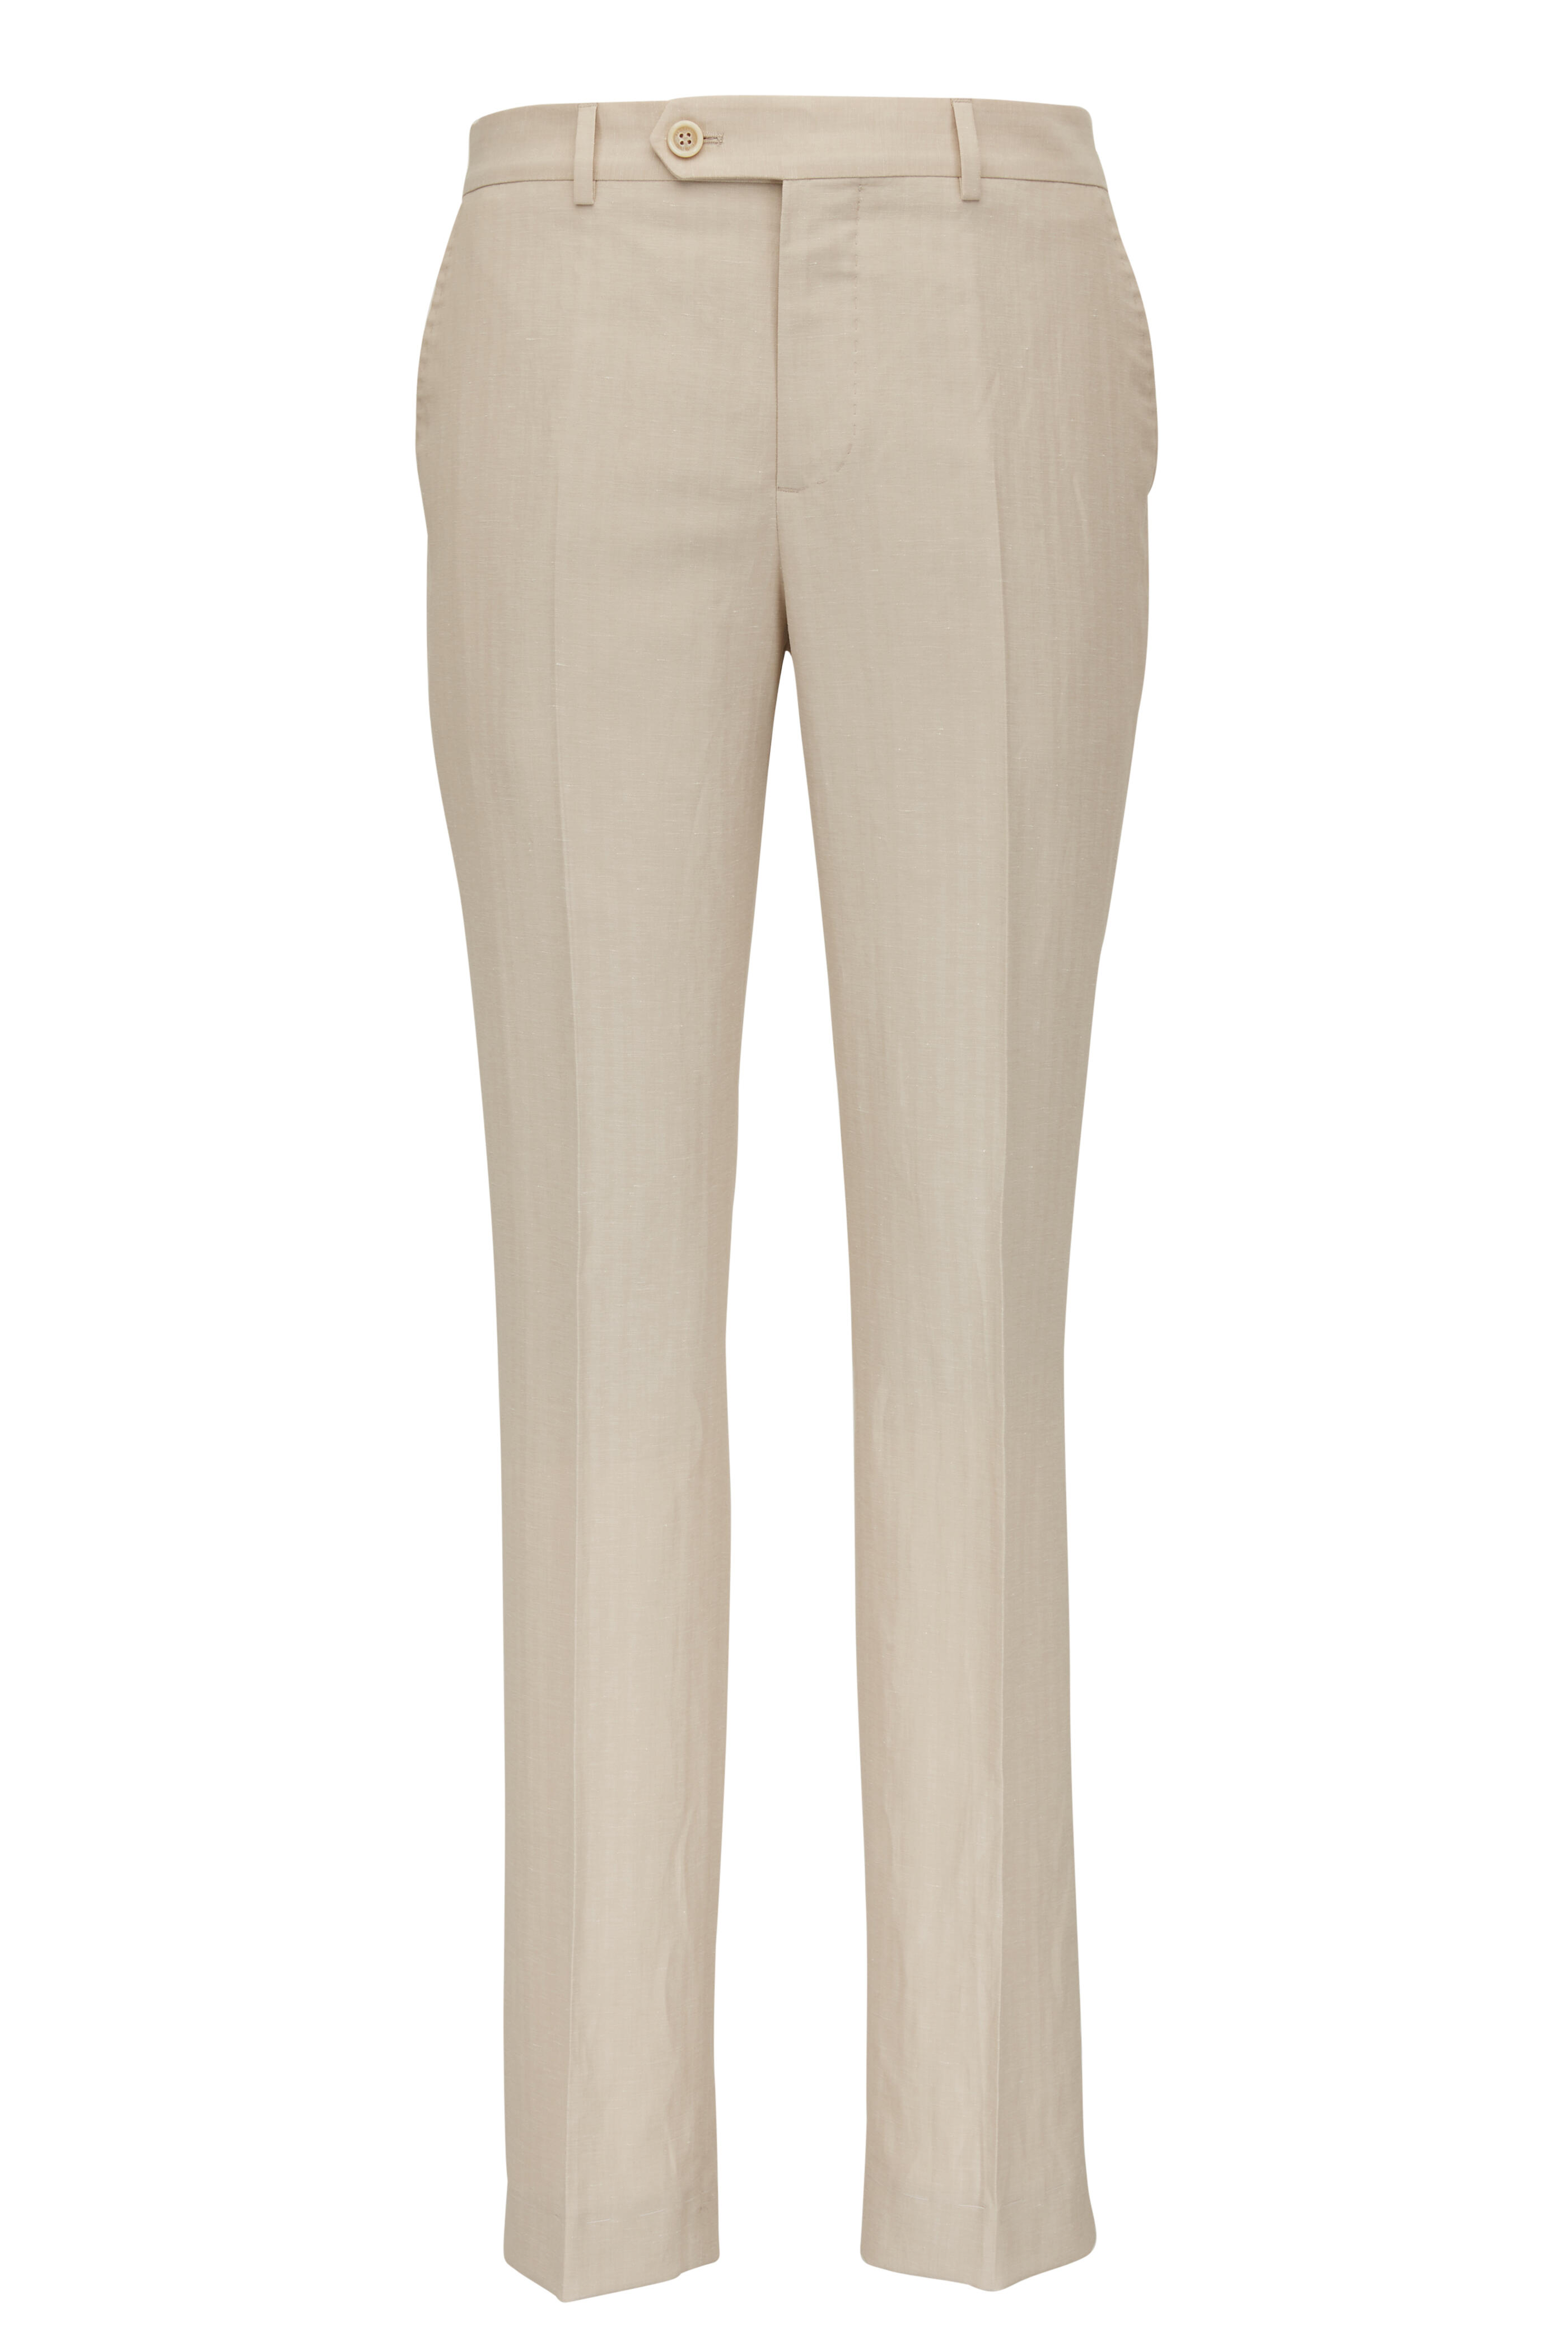 Brunello Cucinelli - Light Beige Linen, Silk & Cotton Suit